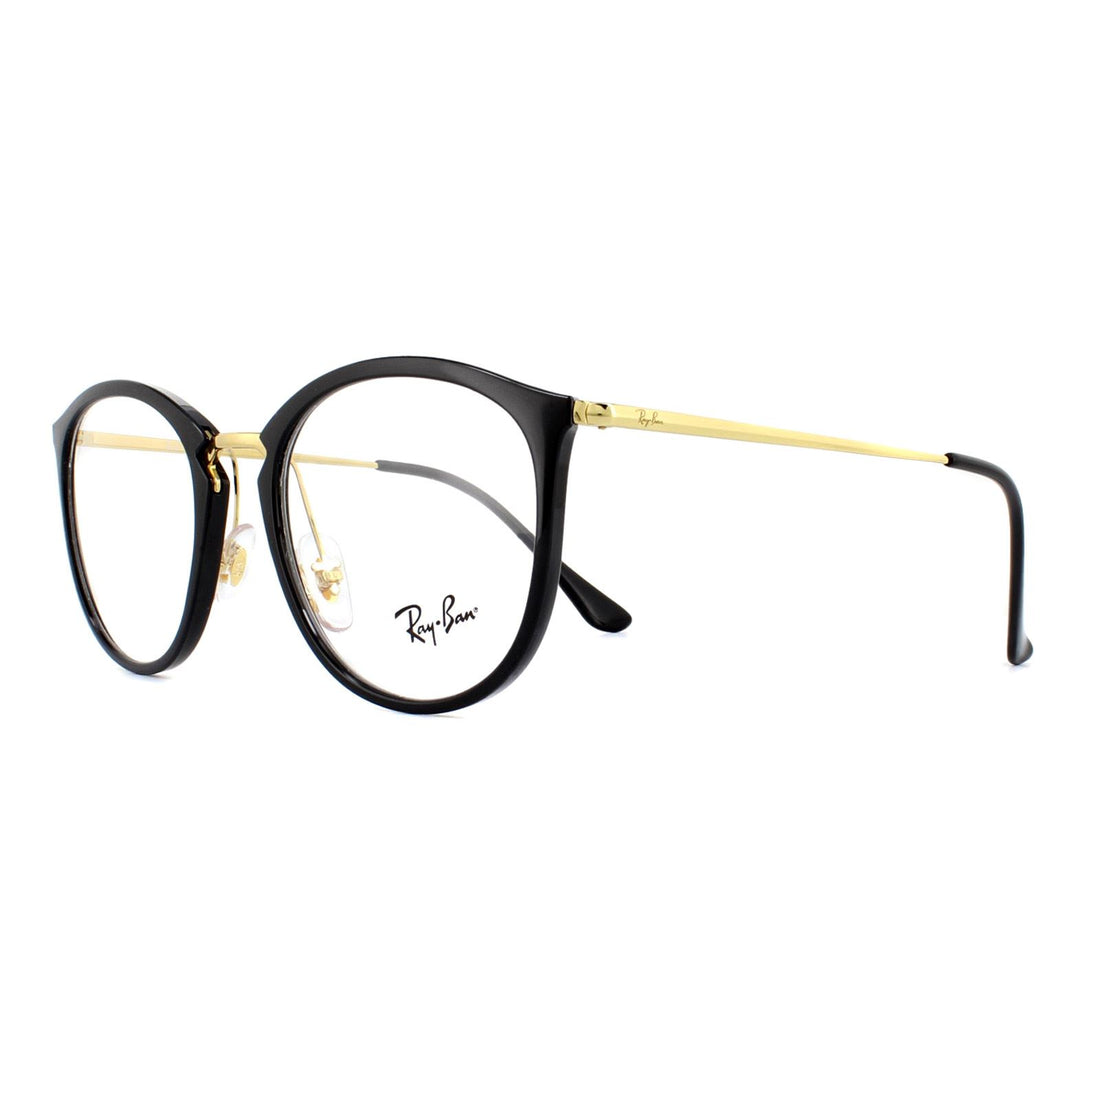 Ray-Ban Glasses Frames 7140 2000 Shiny Black 51mm